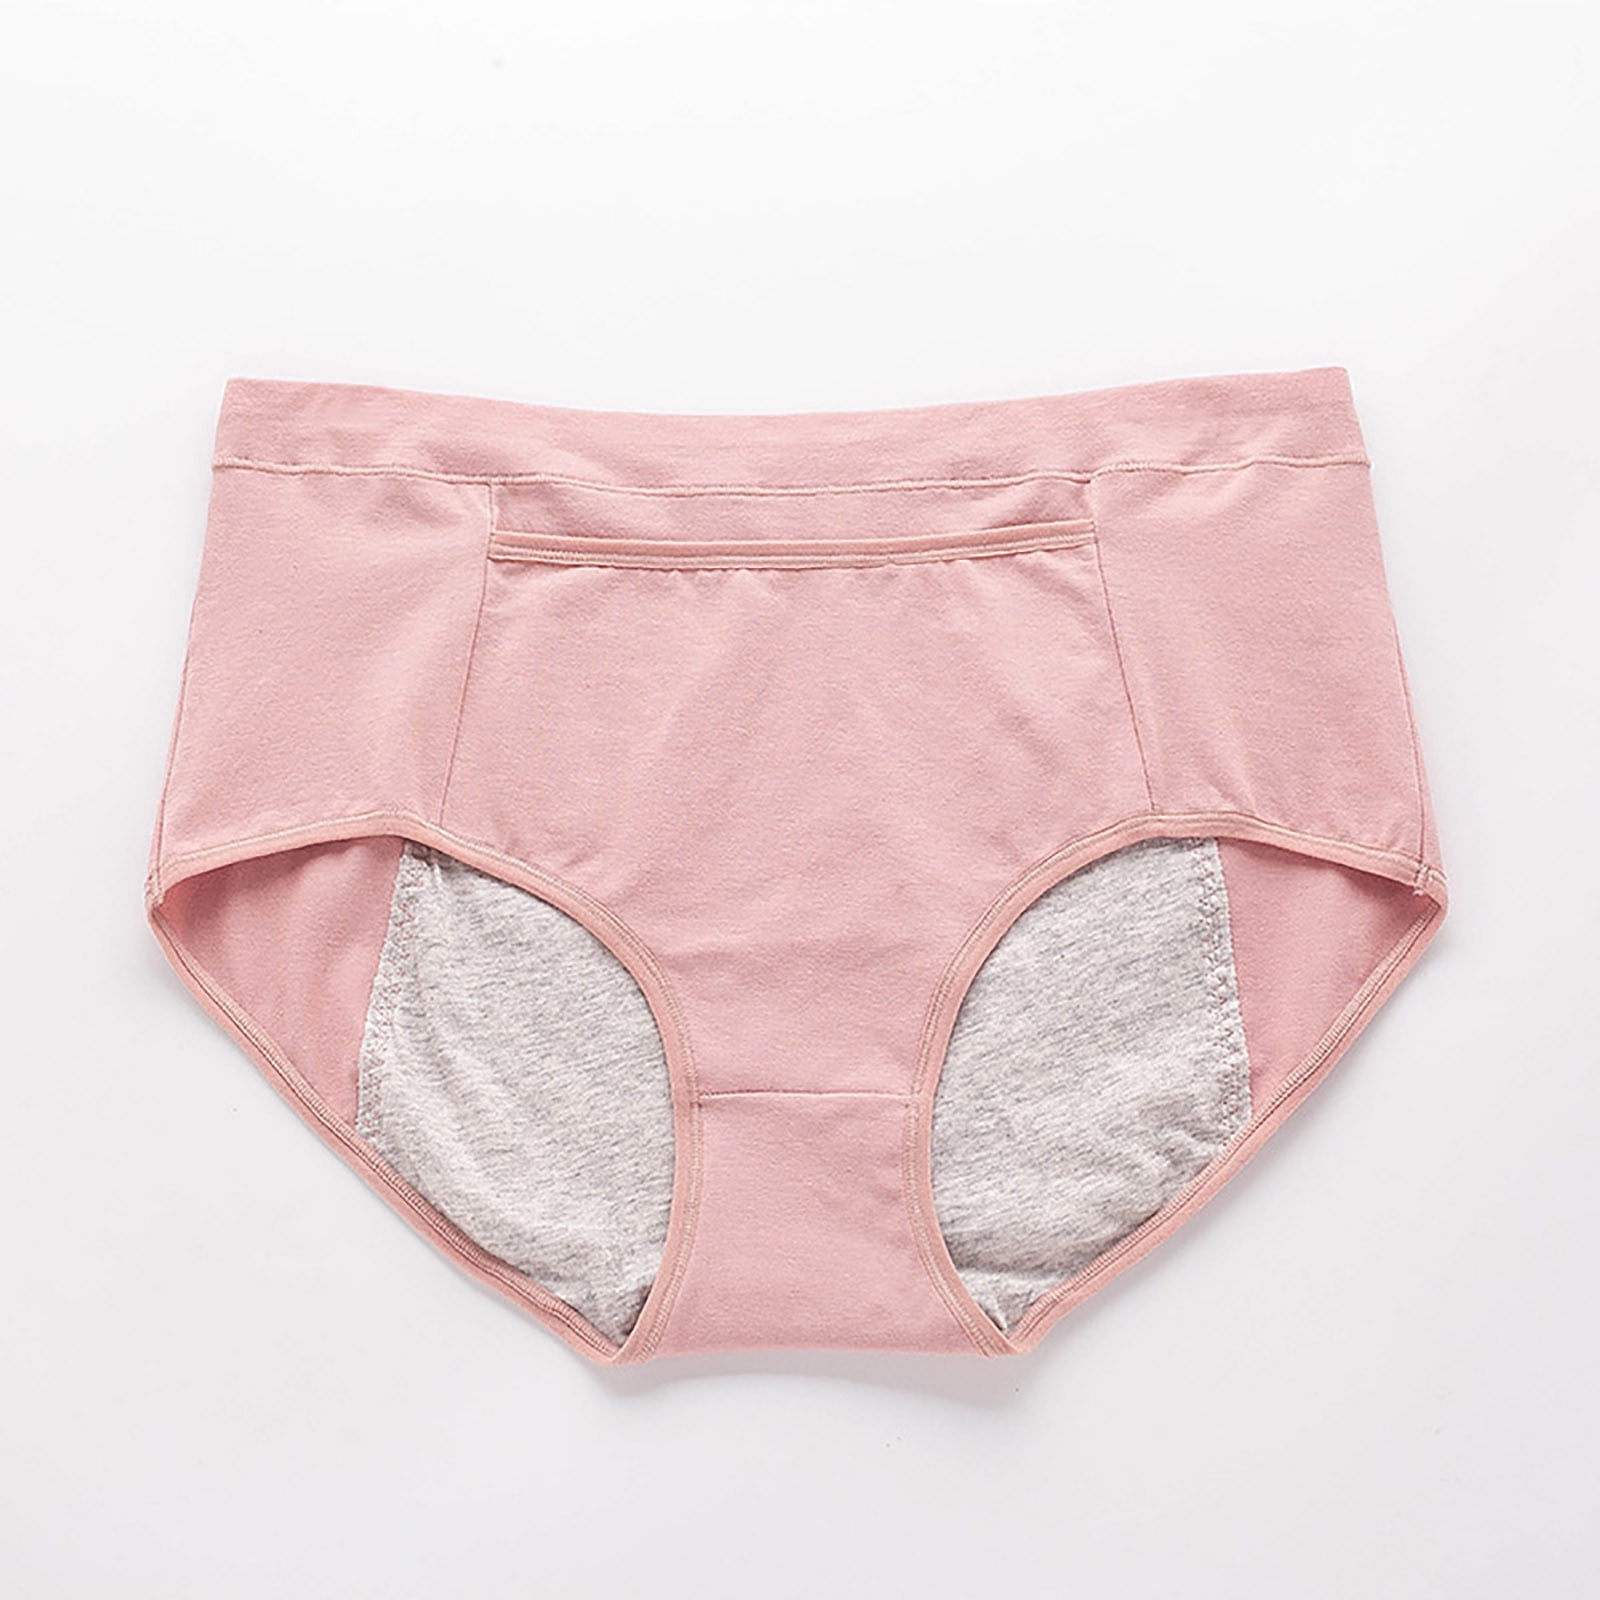 JNGSA High Waisted Underwear for Women Cotton No Muffin Top